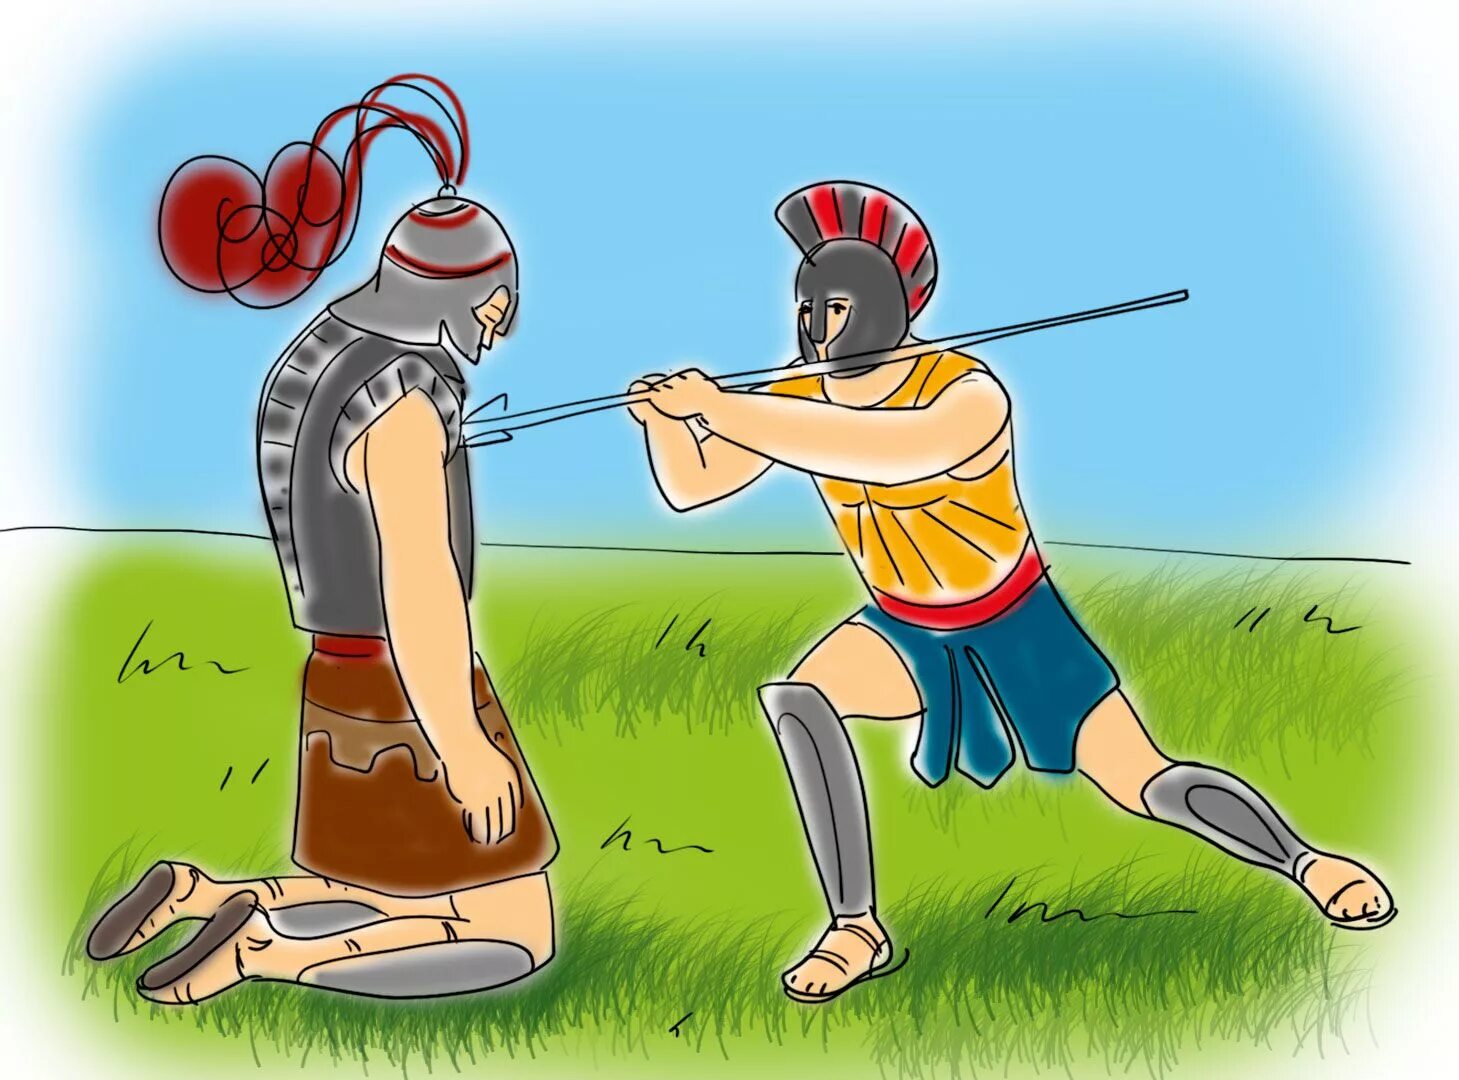 Битва Ахиллеса. Битва Ахиллеса и Гектора рисунок. Поединок Ахиллеса с Гектором. Бой Ахиллеса и Гектора. Бой против друг друга